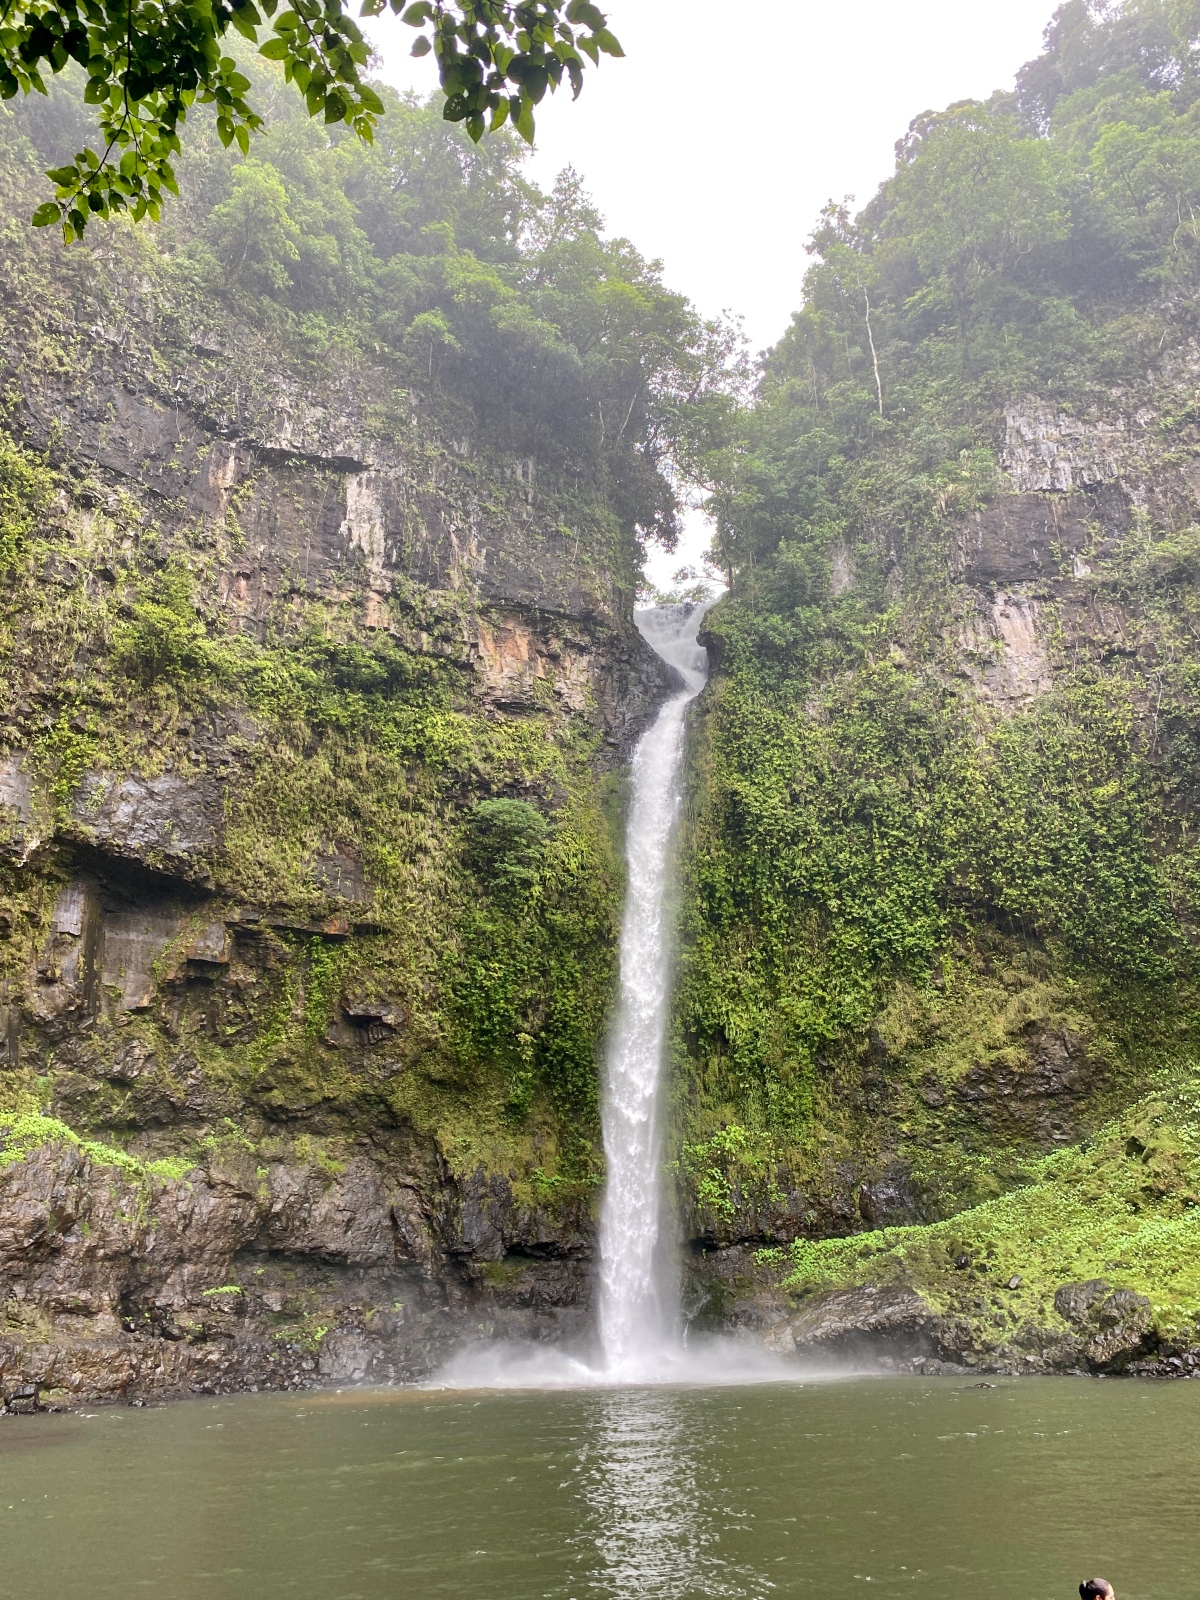 Nandroya Falls
